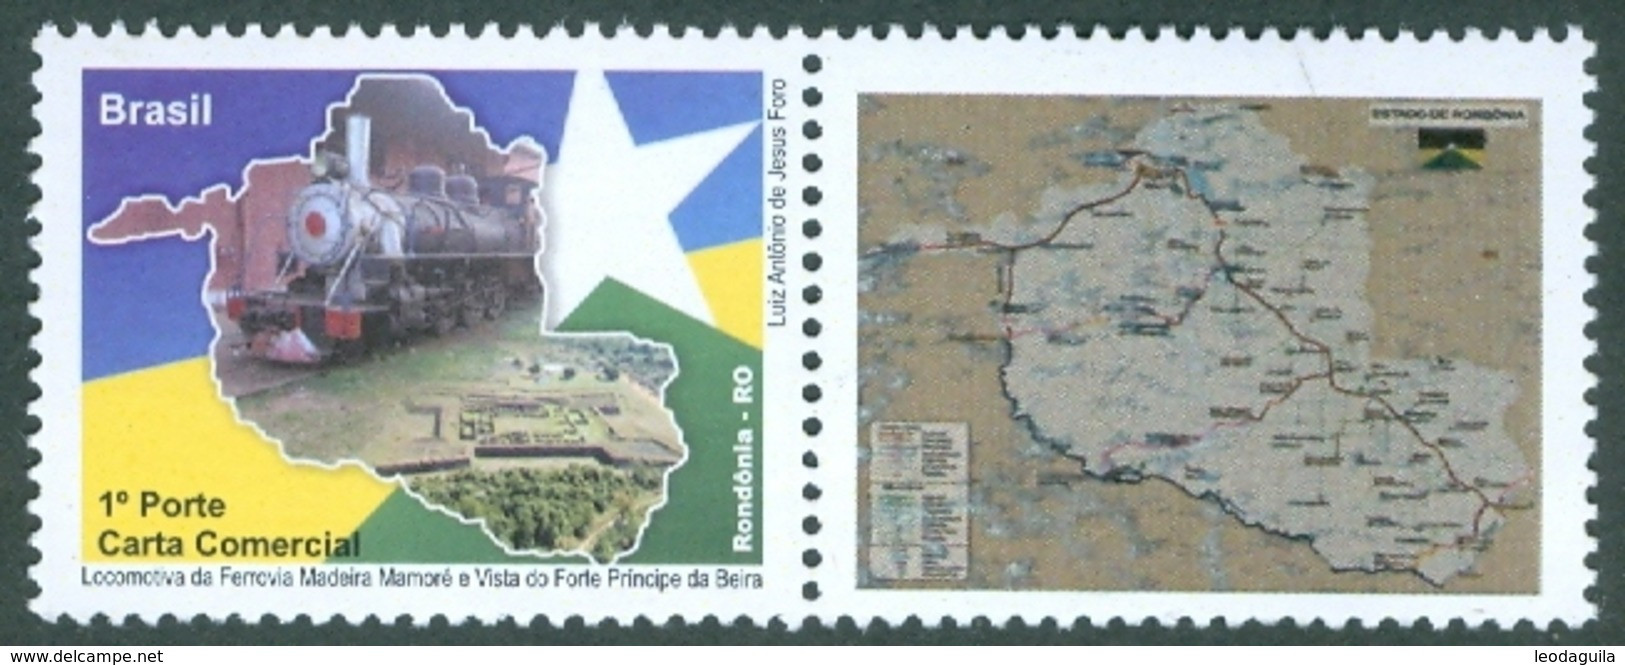 BRAZIL #3115 -LOCOMOTIVE -   EISENBAHN  - RONDONIA  RAILWAY  - PERSONALIZED STAMP WITH VIGNETE -  2009 - Gepersonaliseerde Postzegels